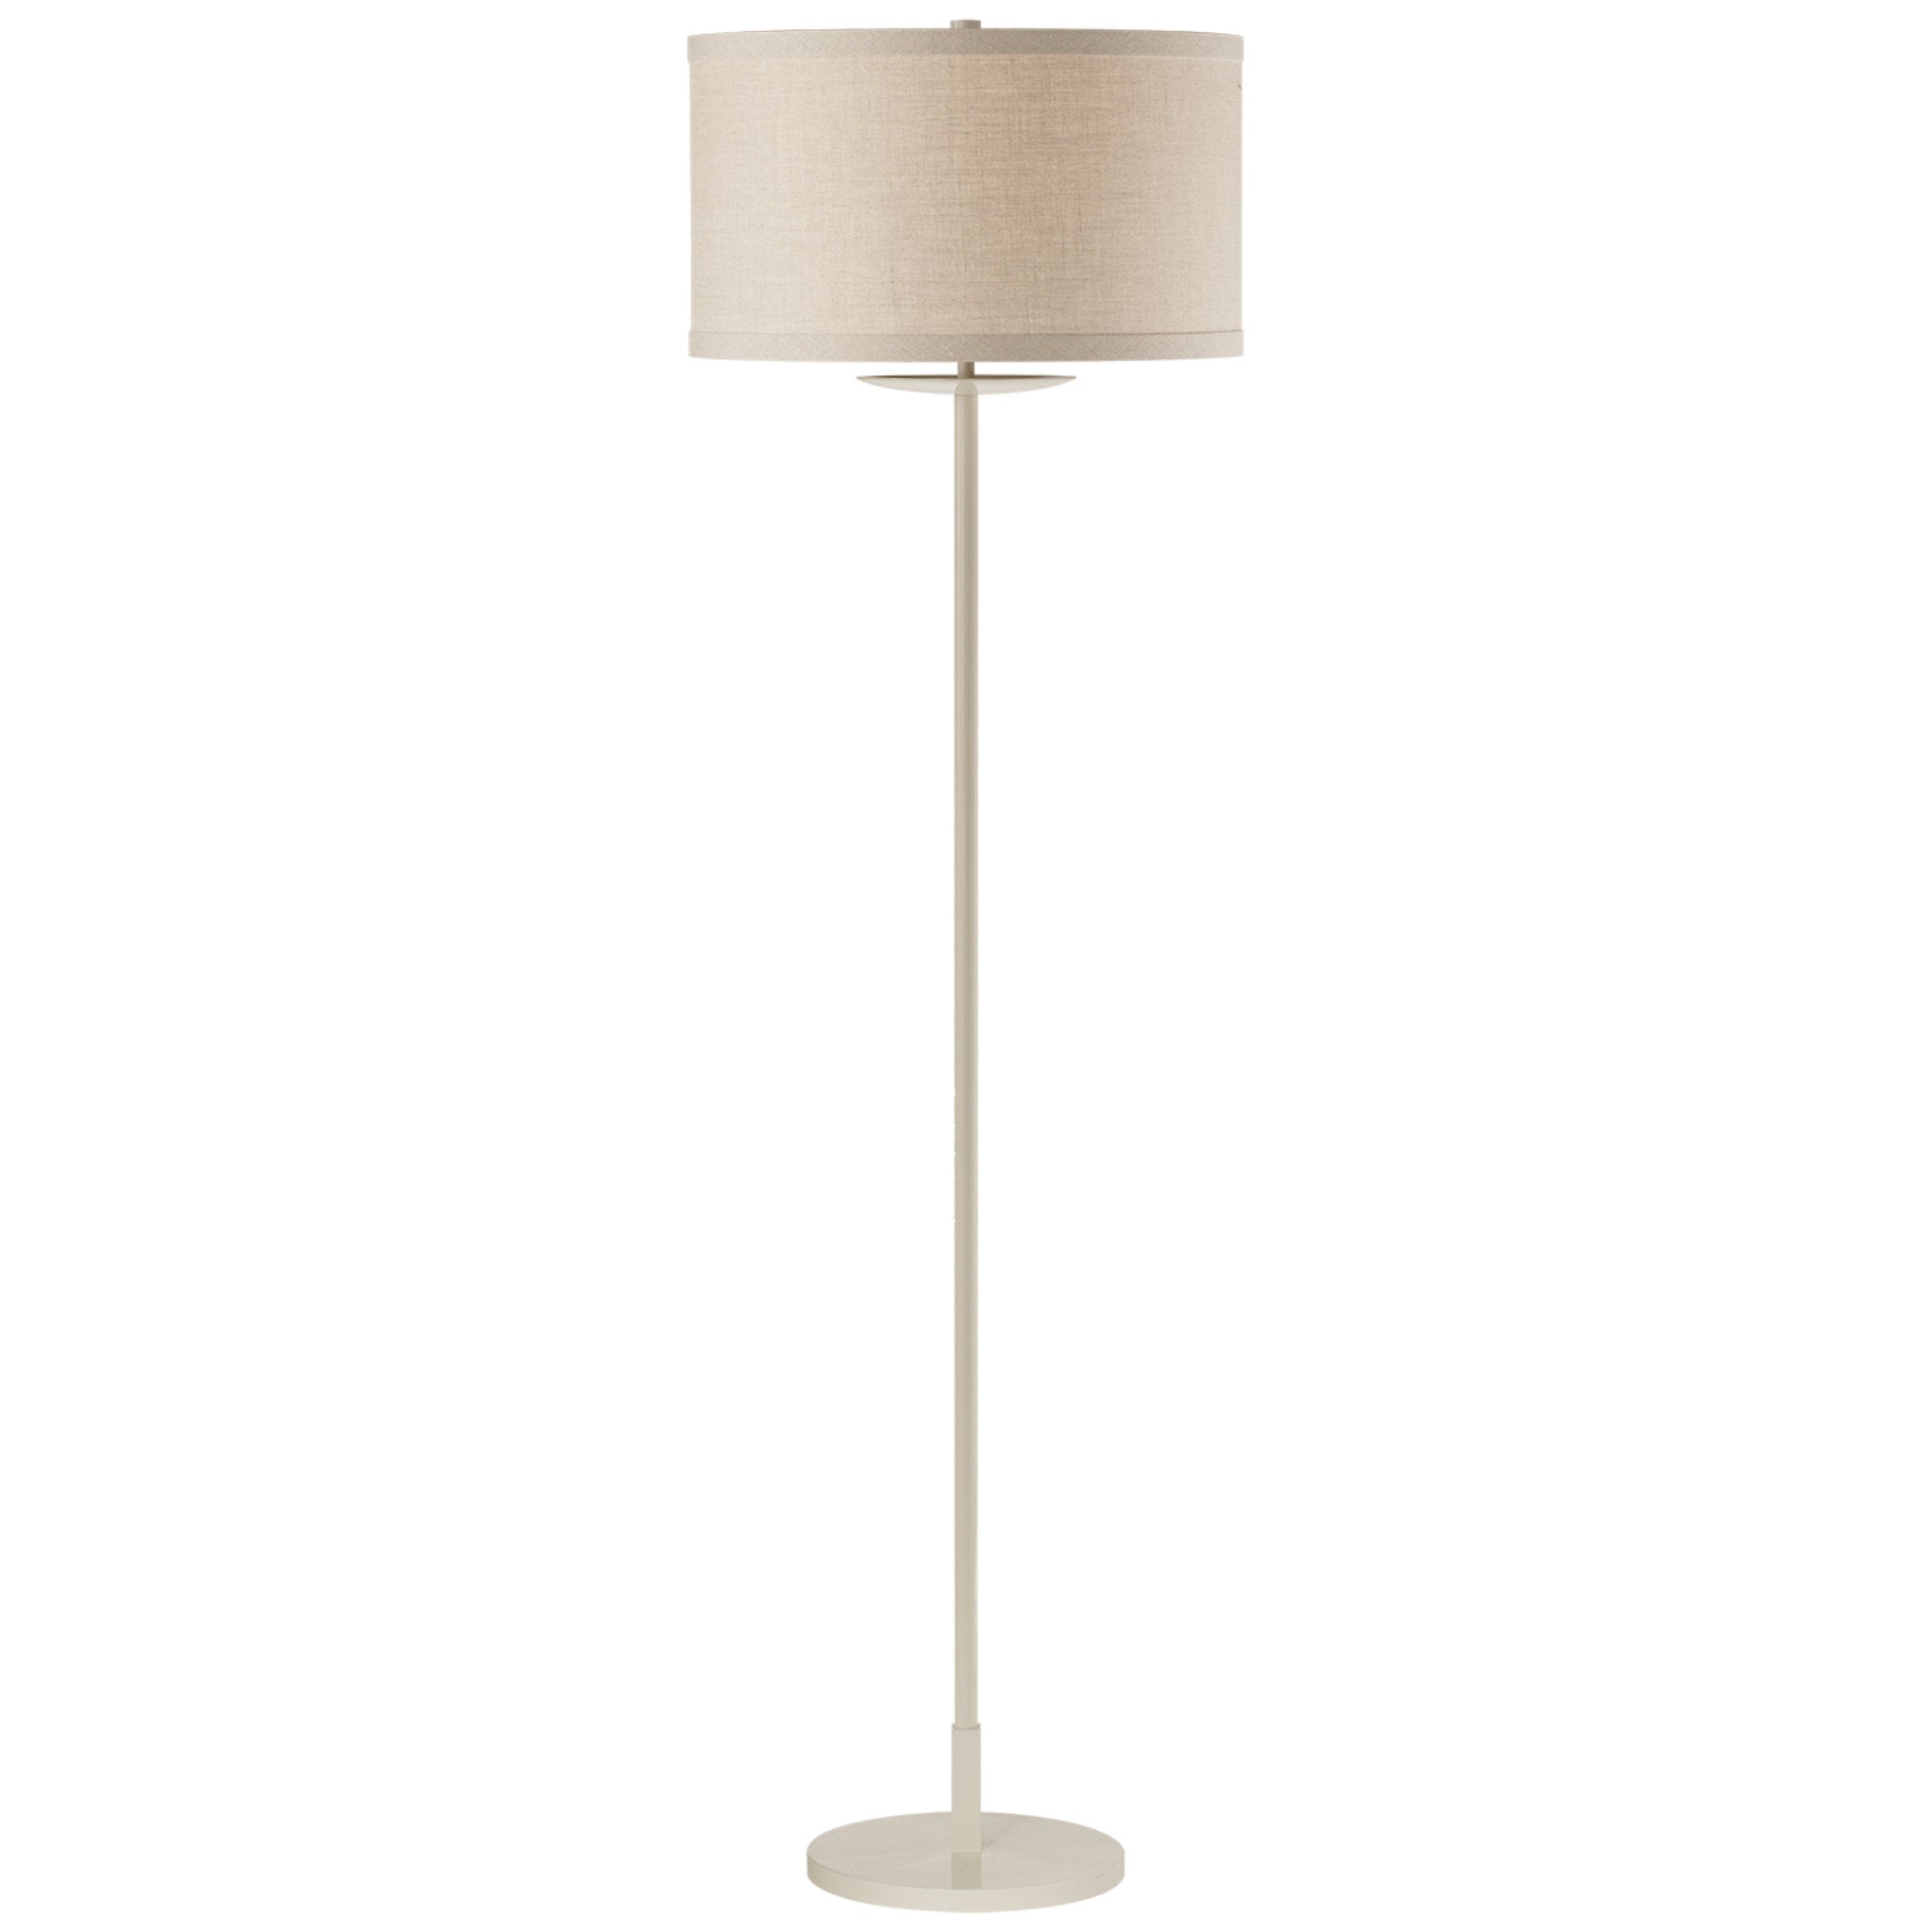 kate spade new york Walker Medium Floor Lamp in Light Cream with Natural Linen Shade